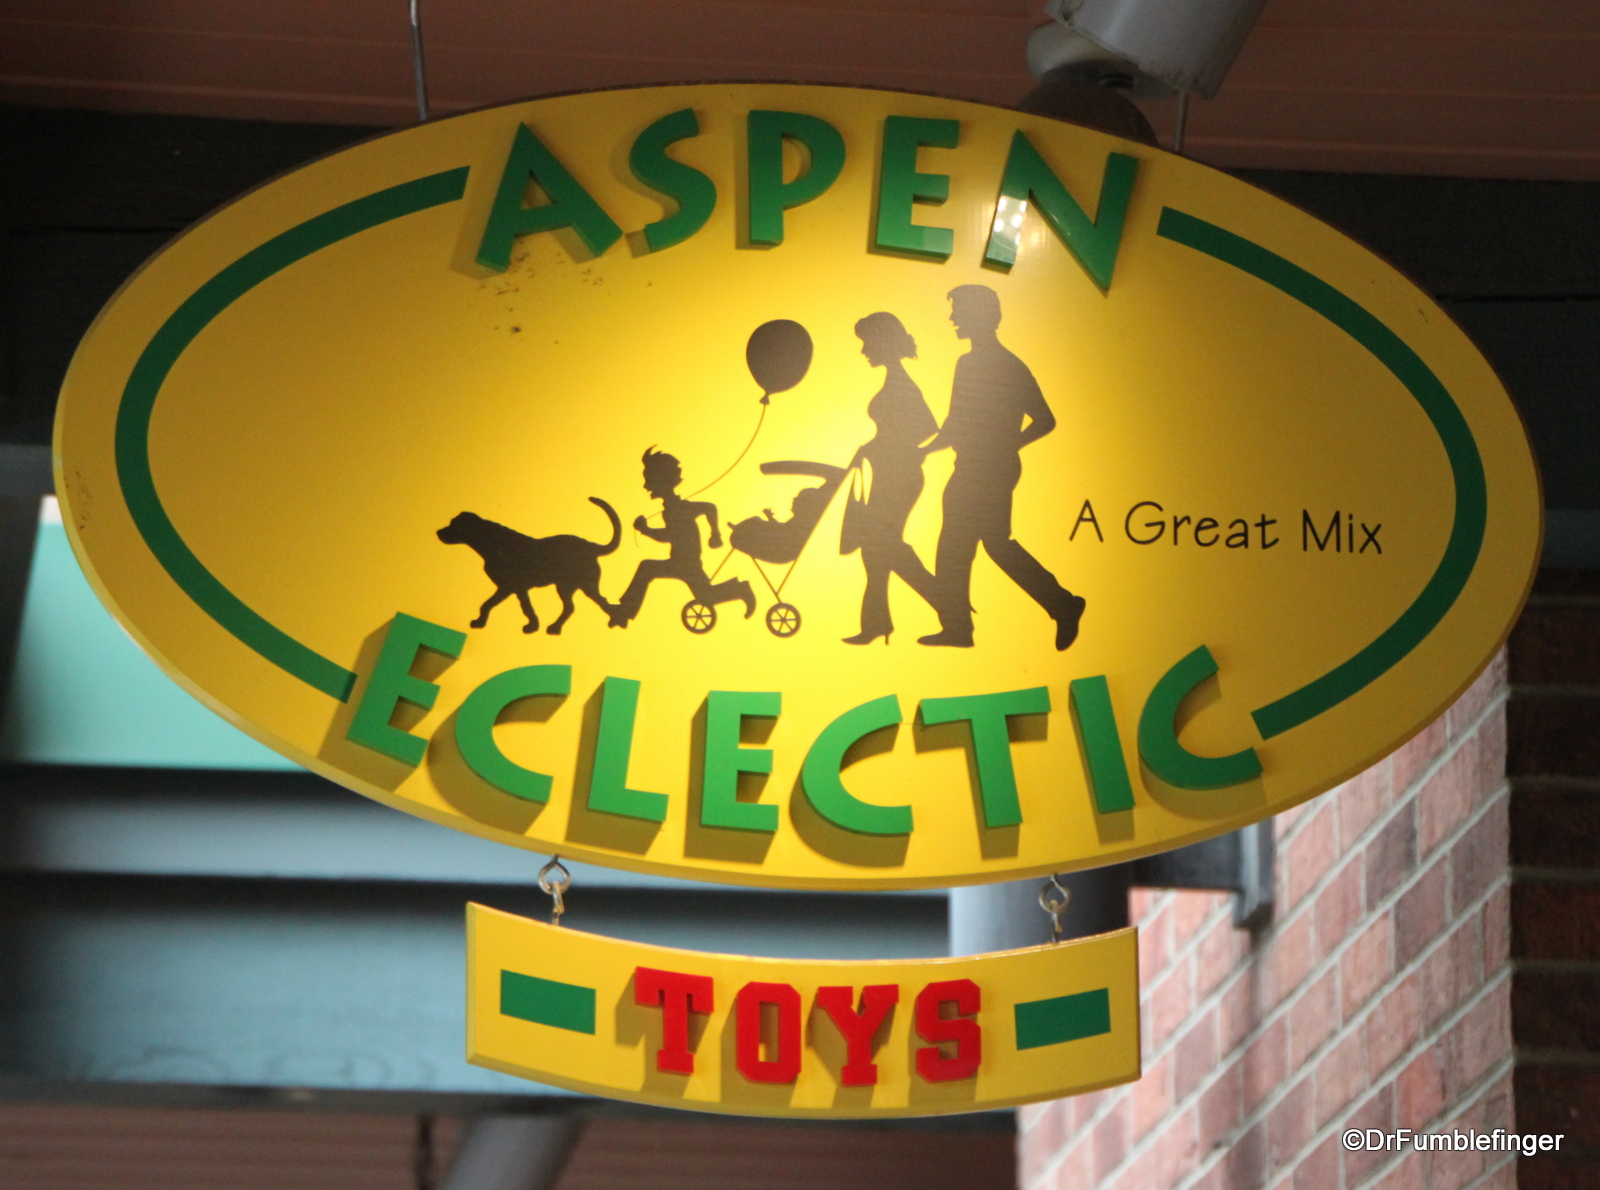 17 Signs of Aspen